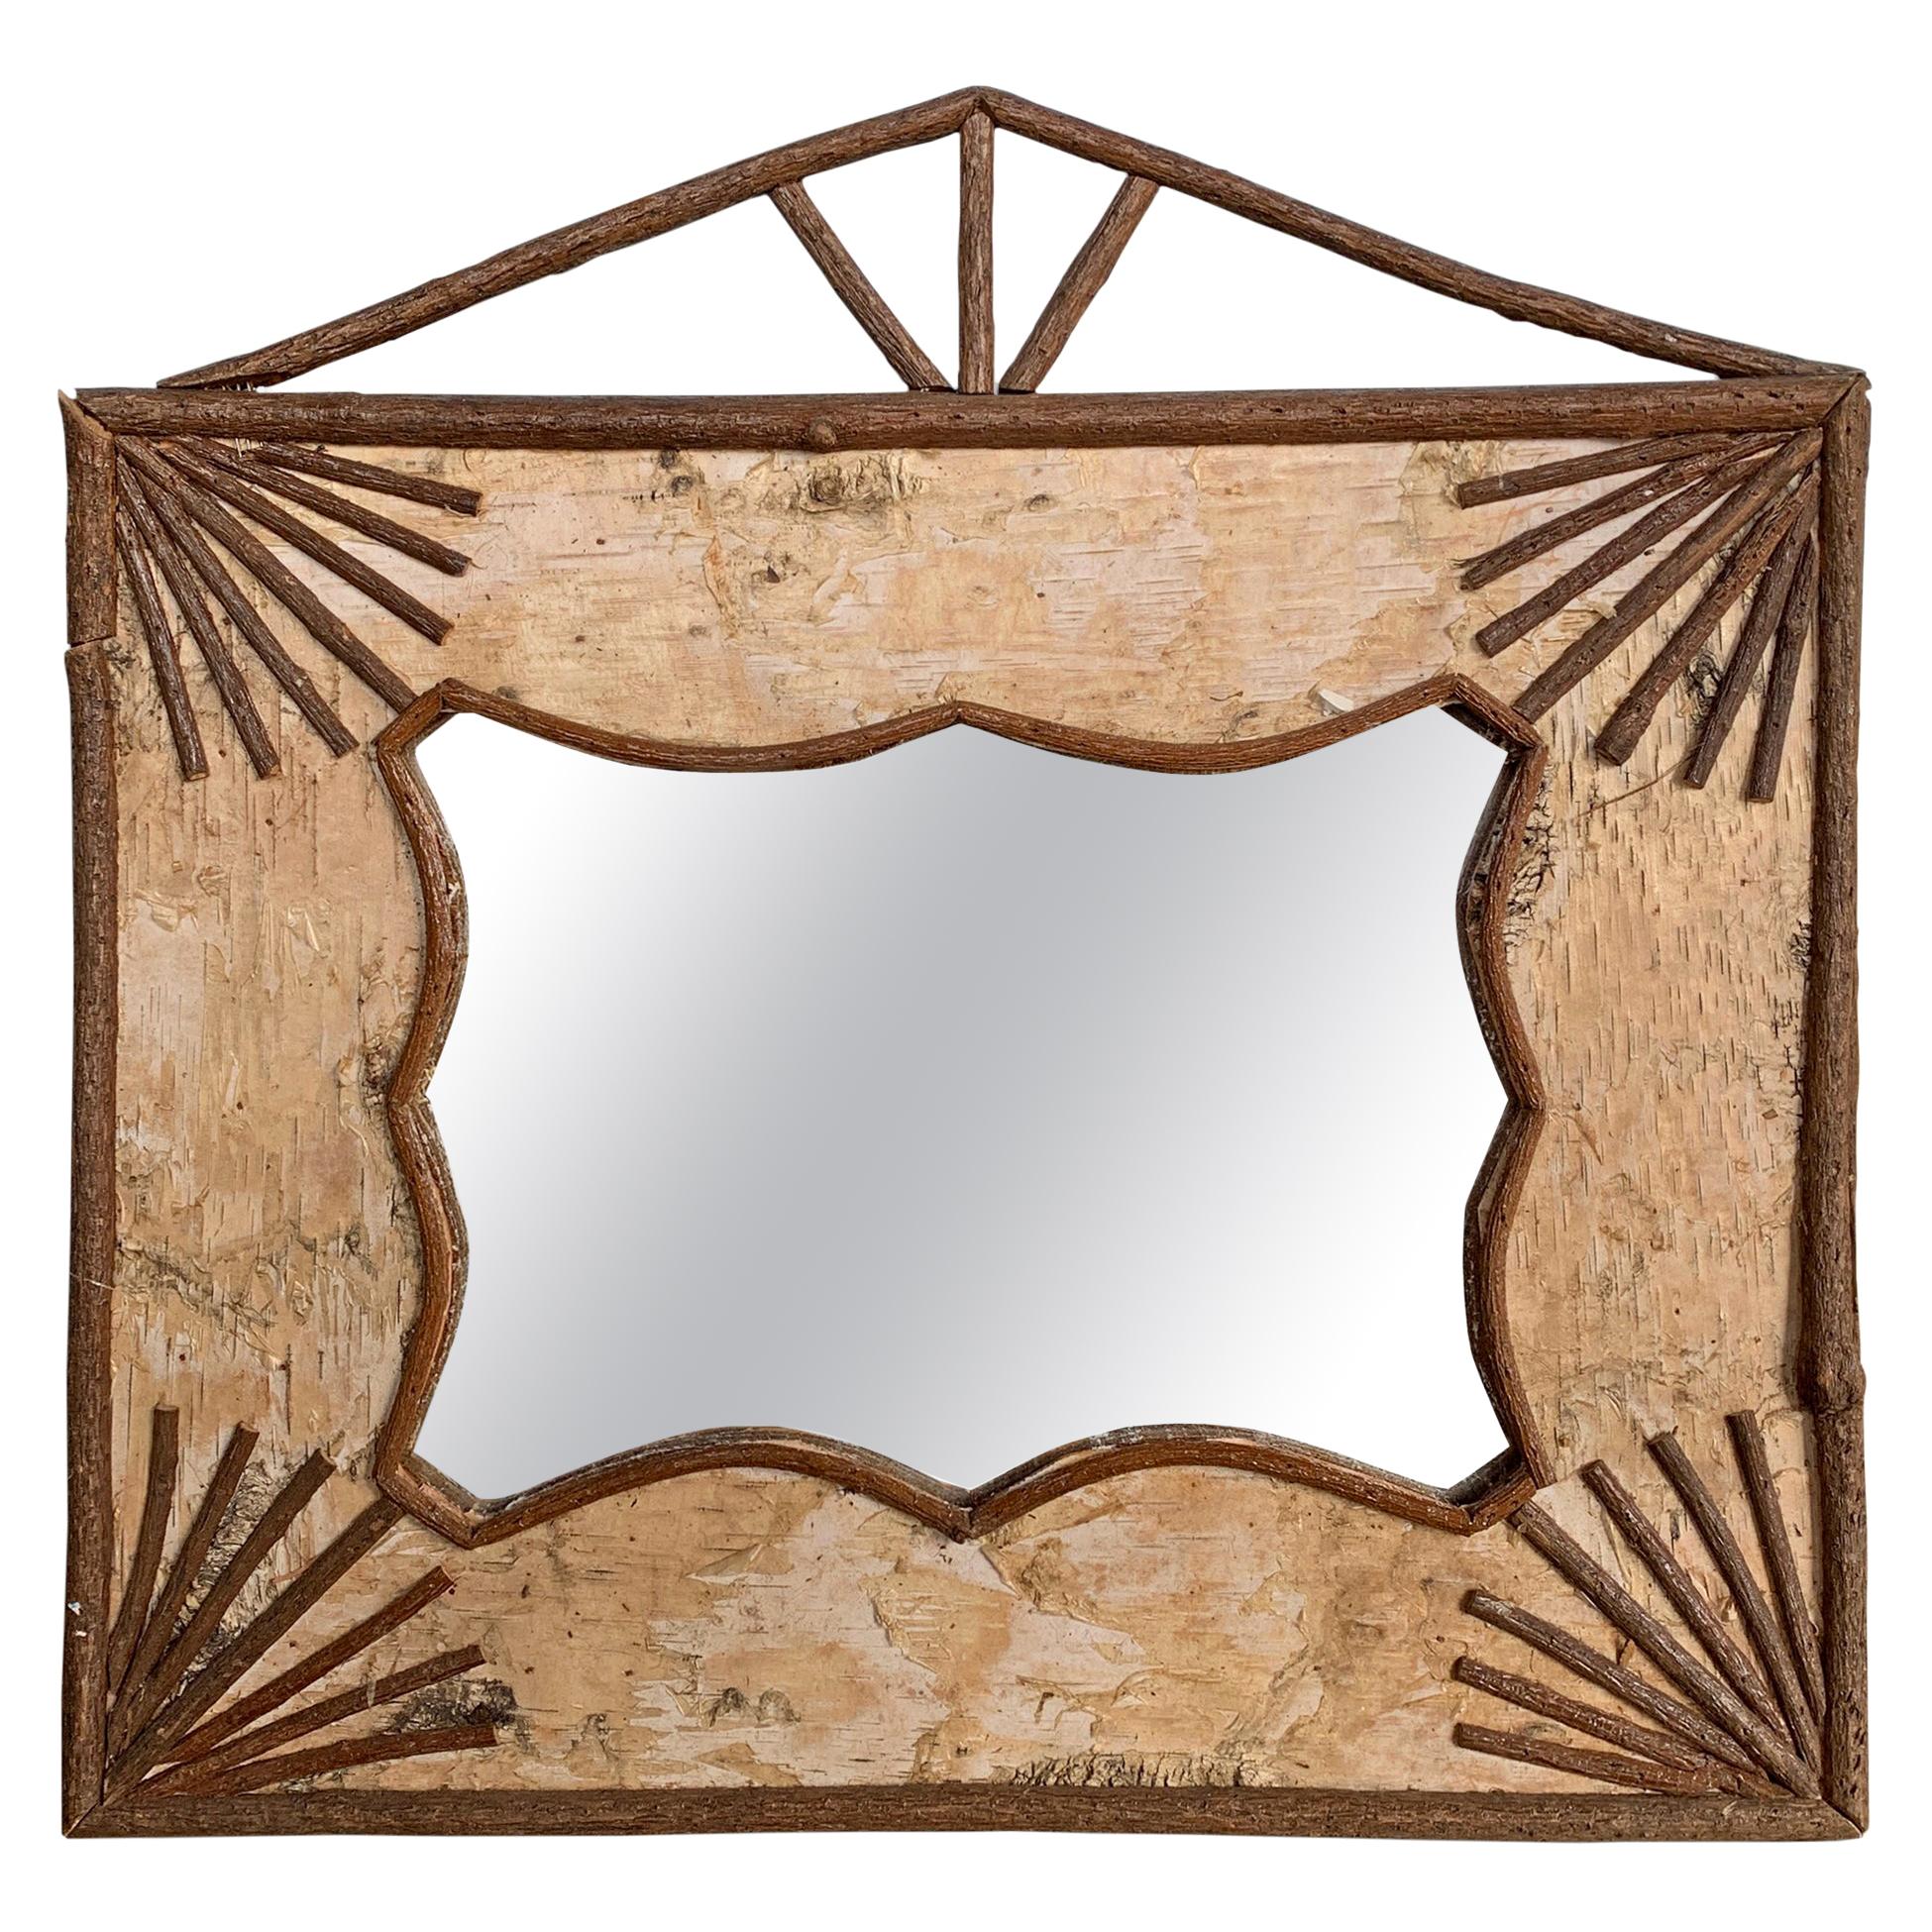 20th Century American Adirondack-Style Mirror